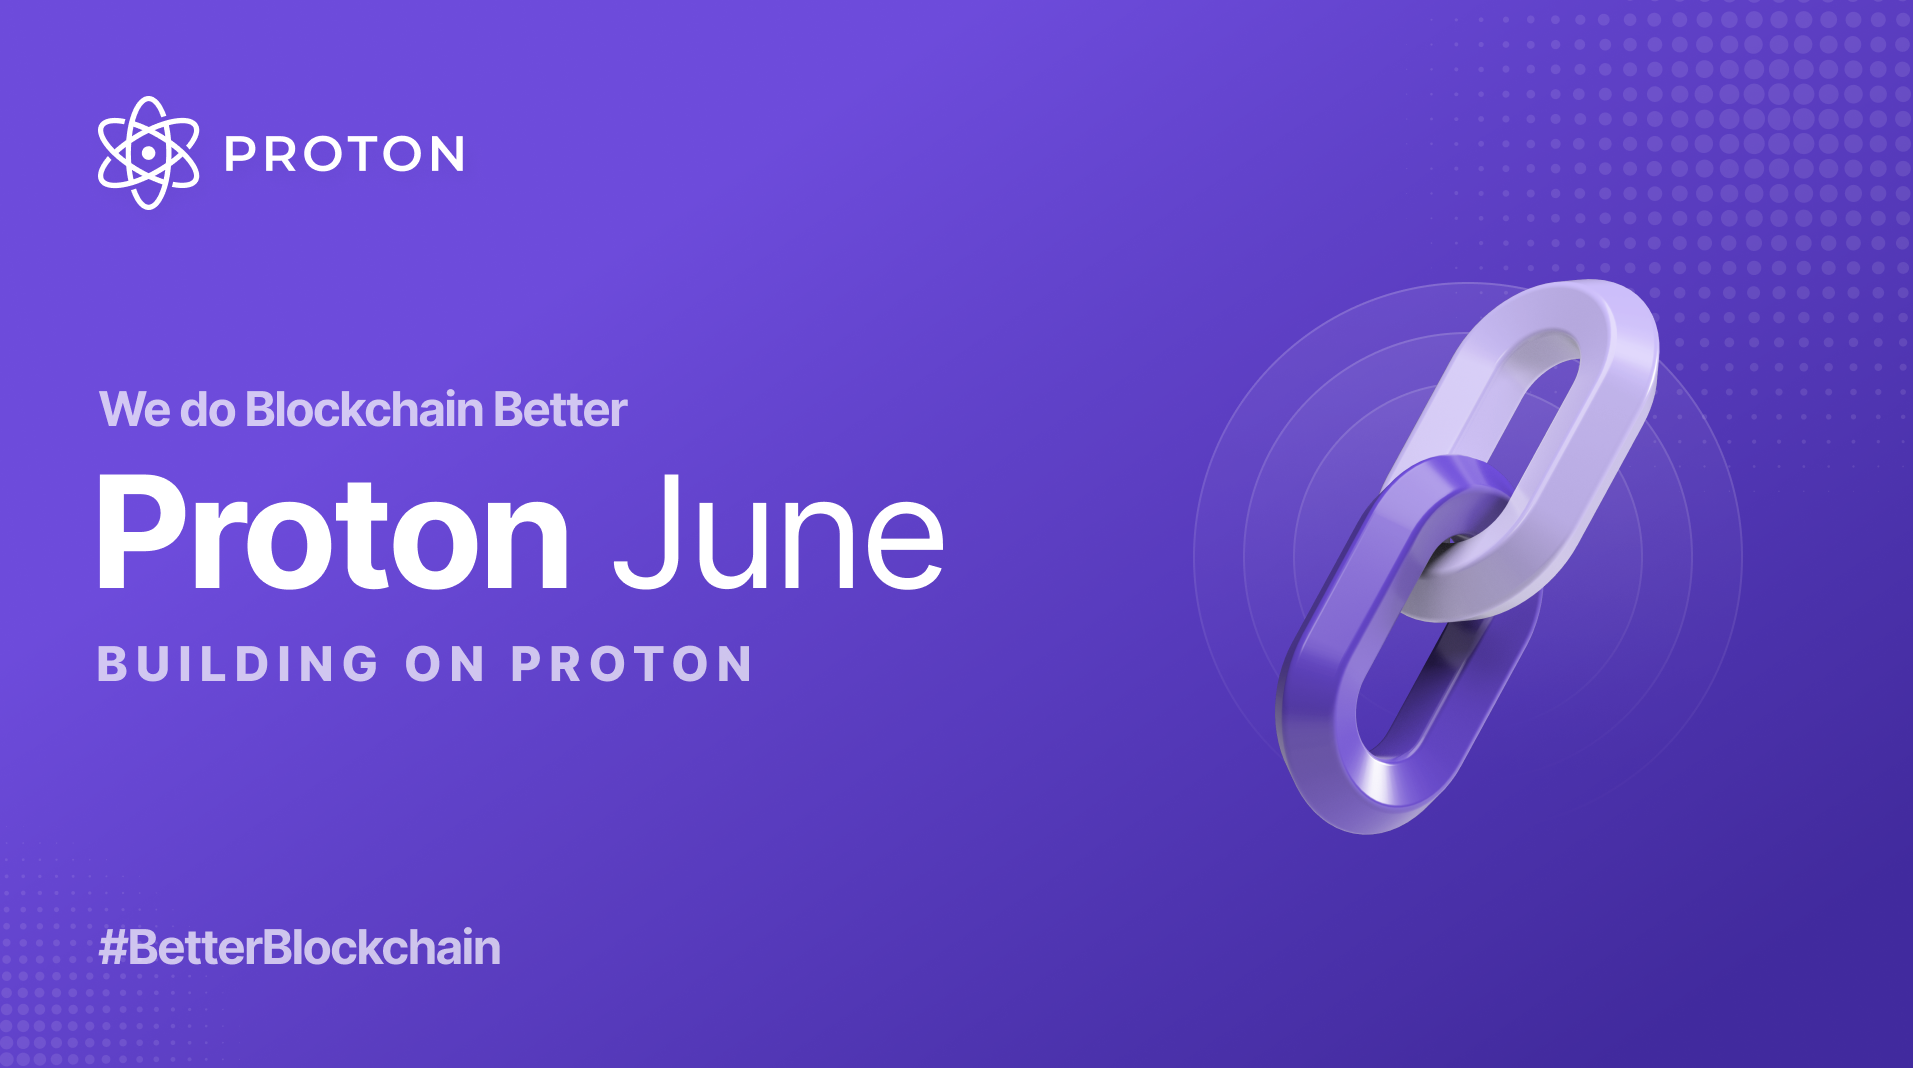 Introducing: Proton June #BetterBlockchain